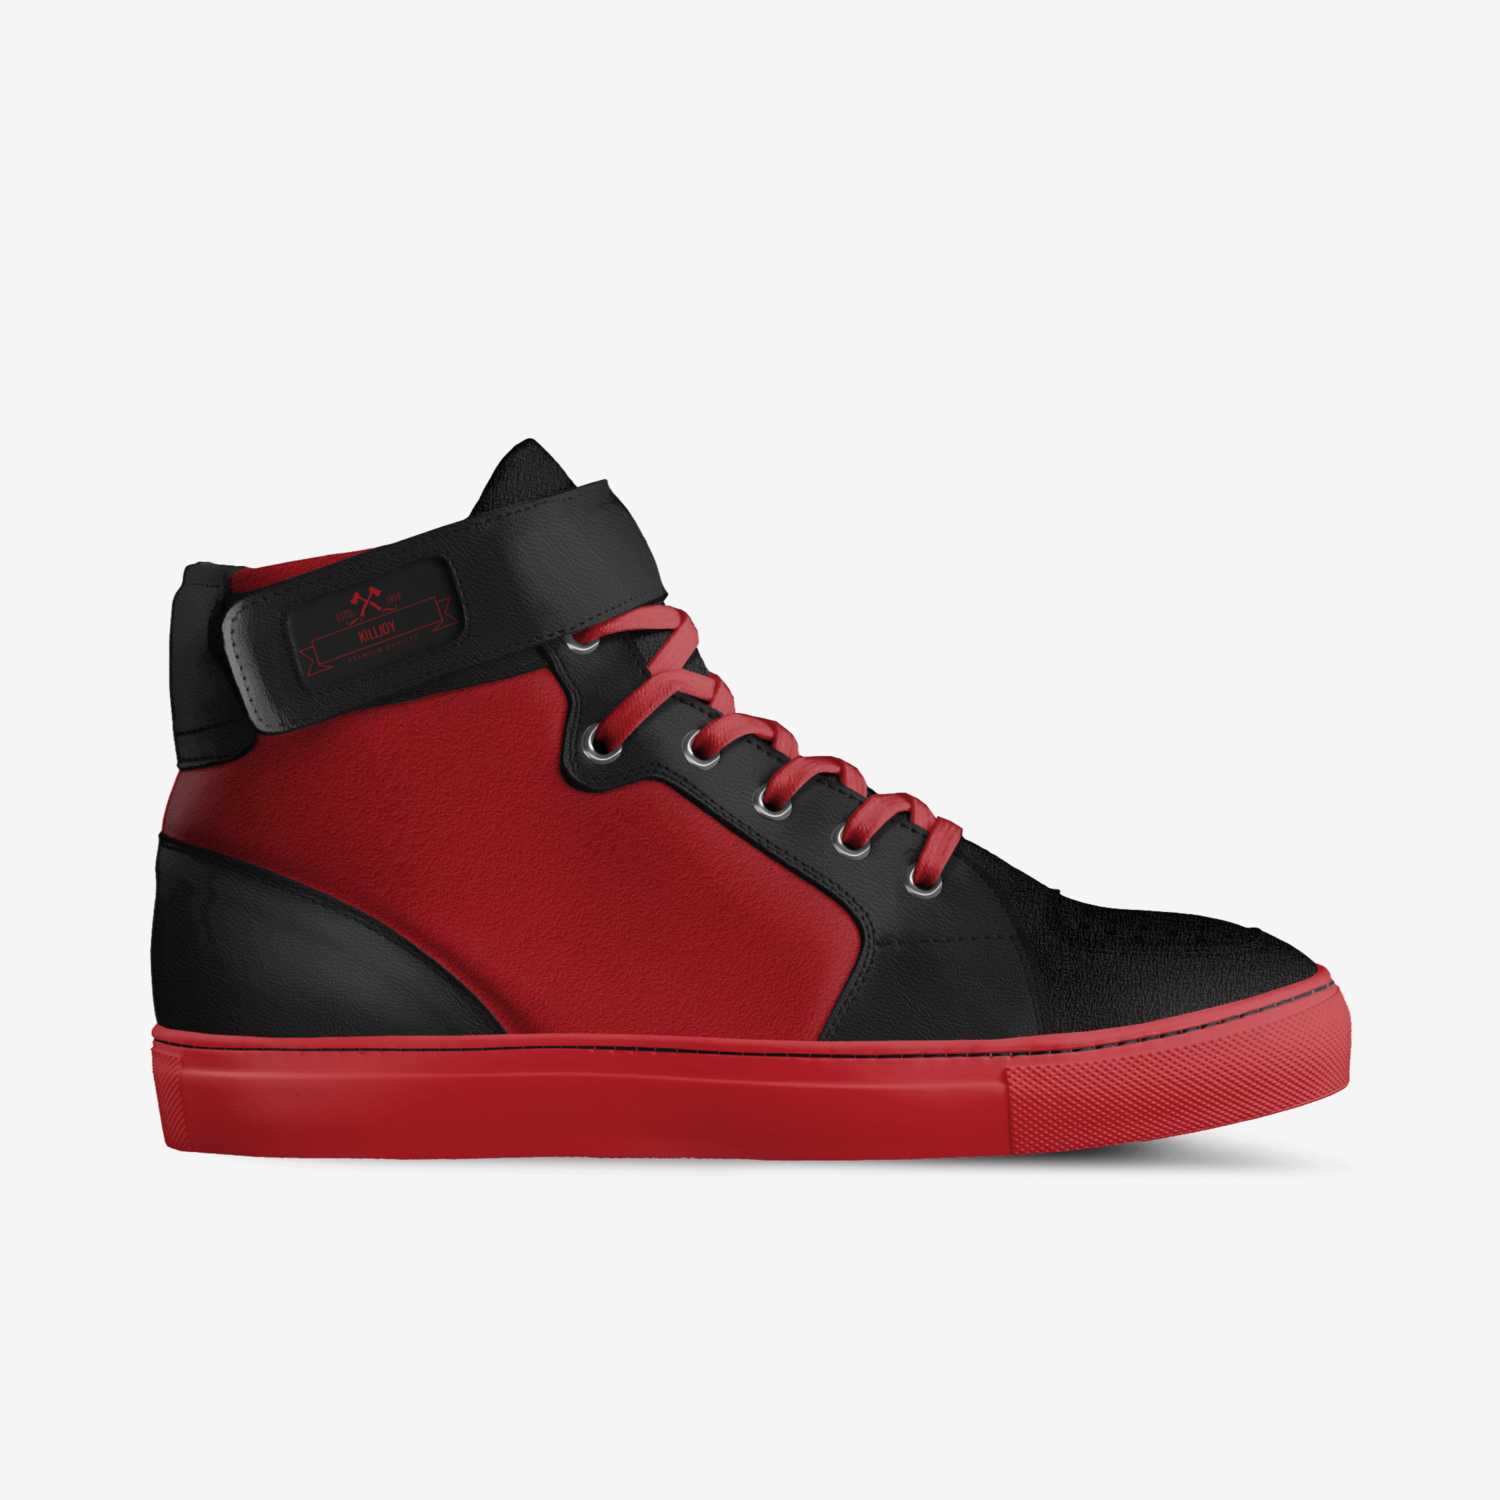 Santa Cruz metal knee red sole - Shoebidoo Shoes